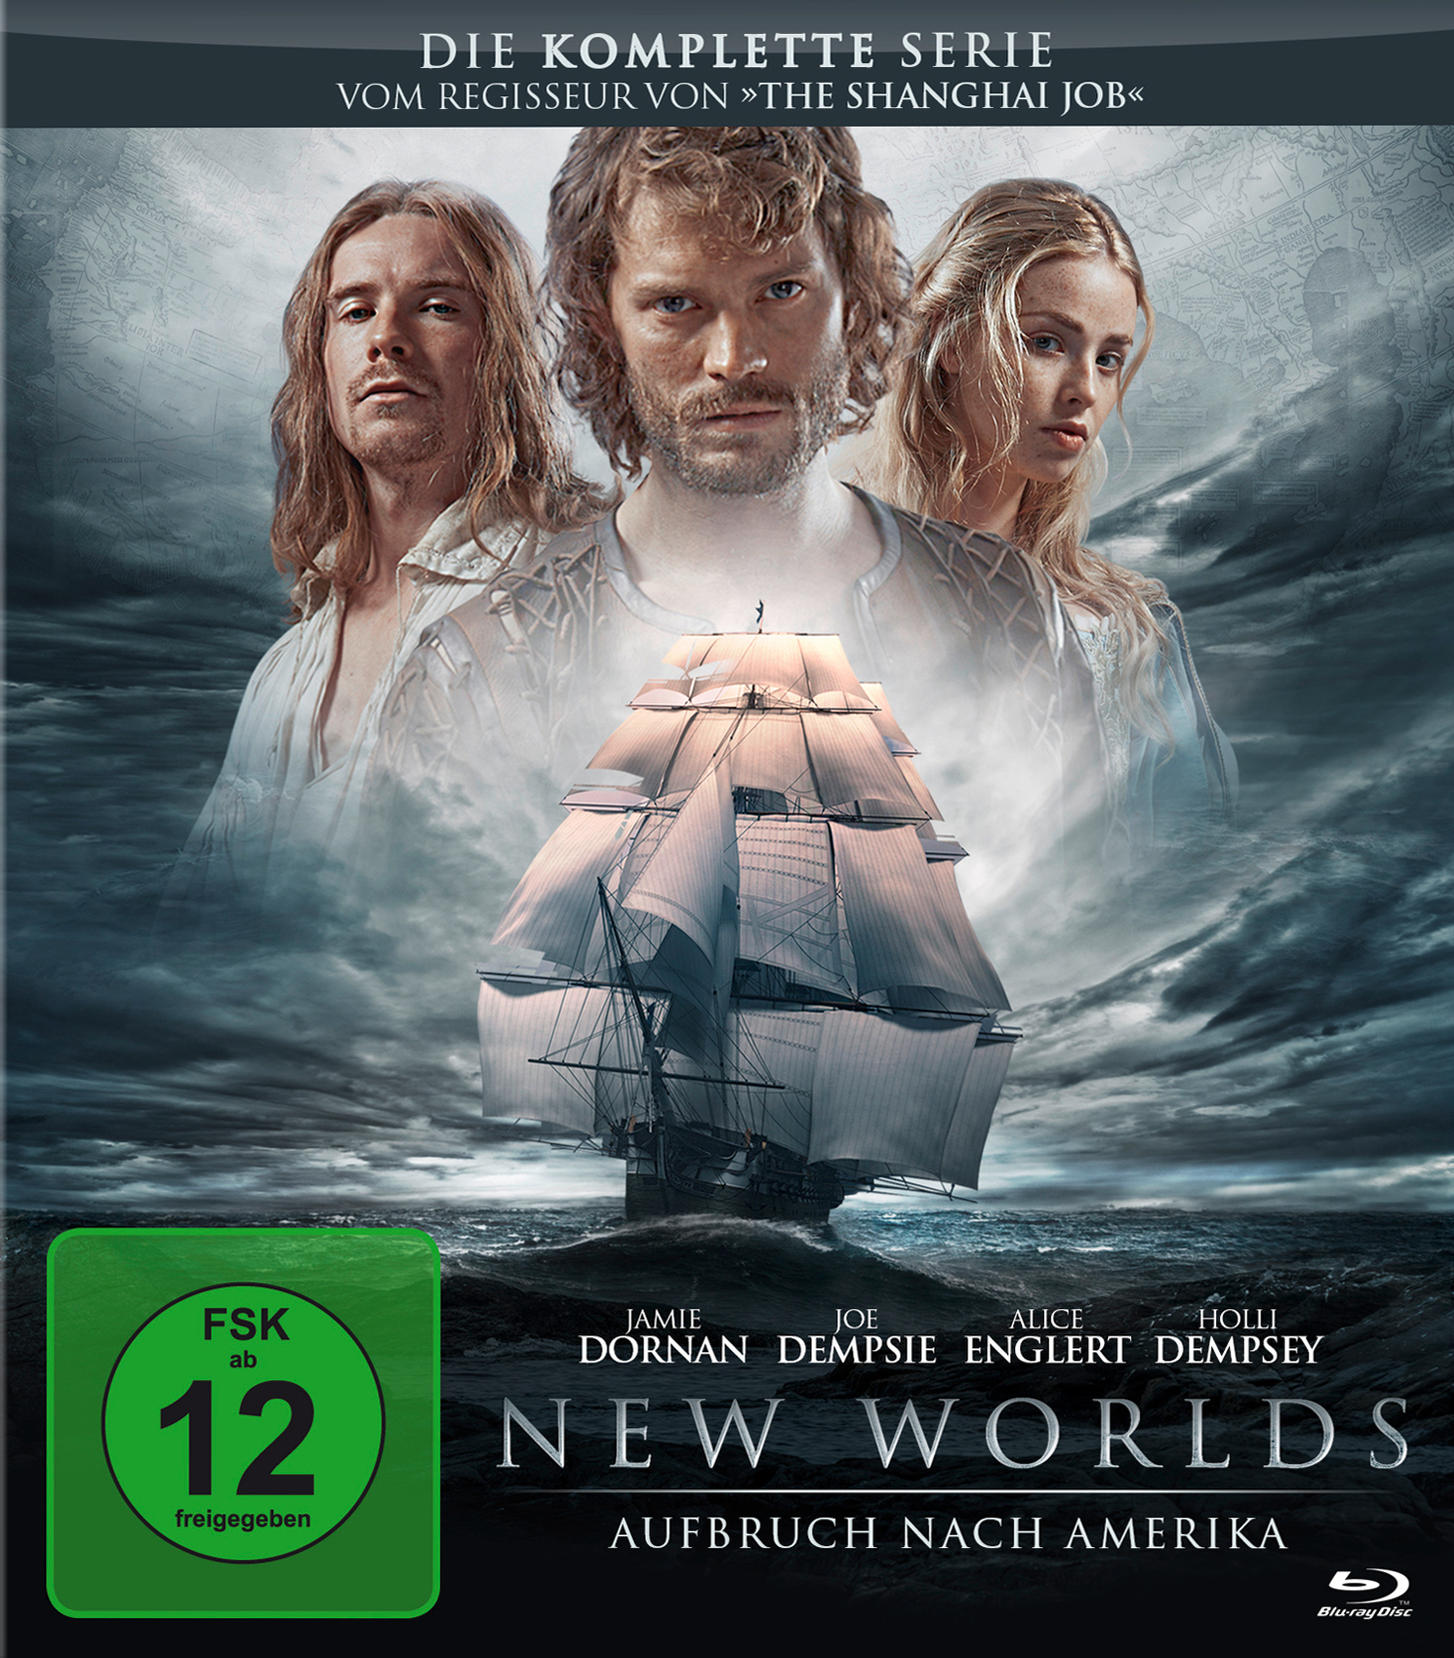 New Worlds - Aufbruch Amerika Blu-ray nach